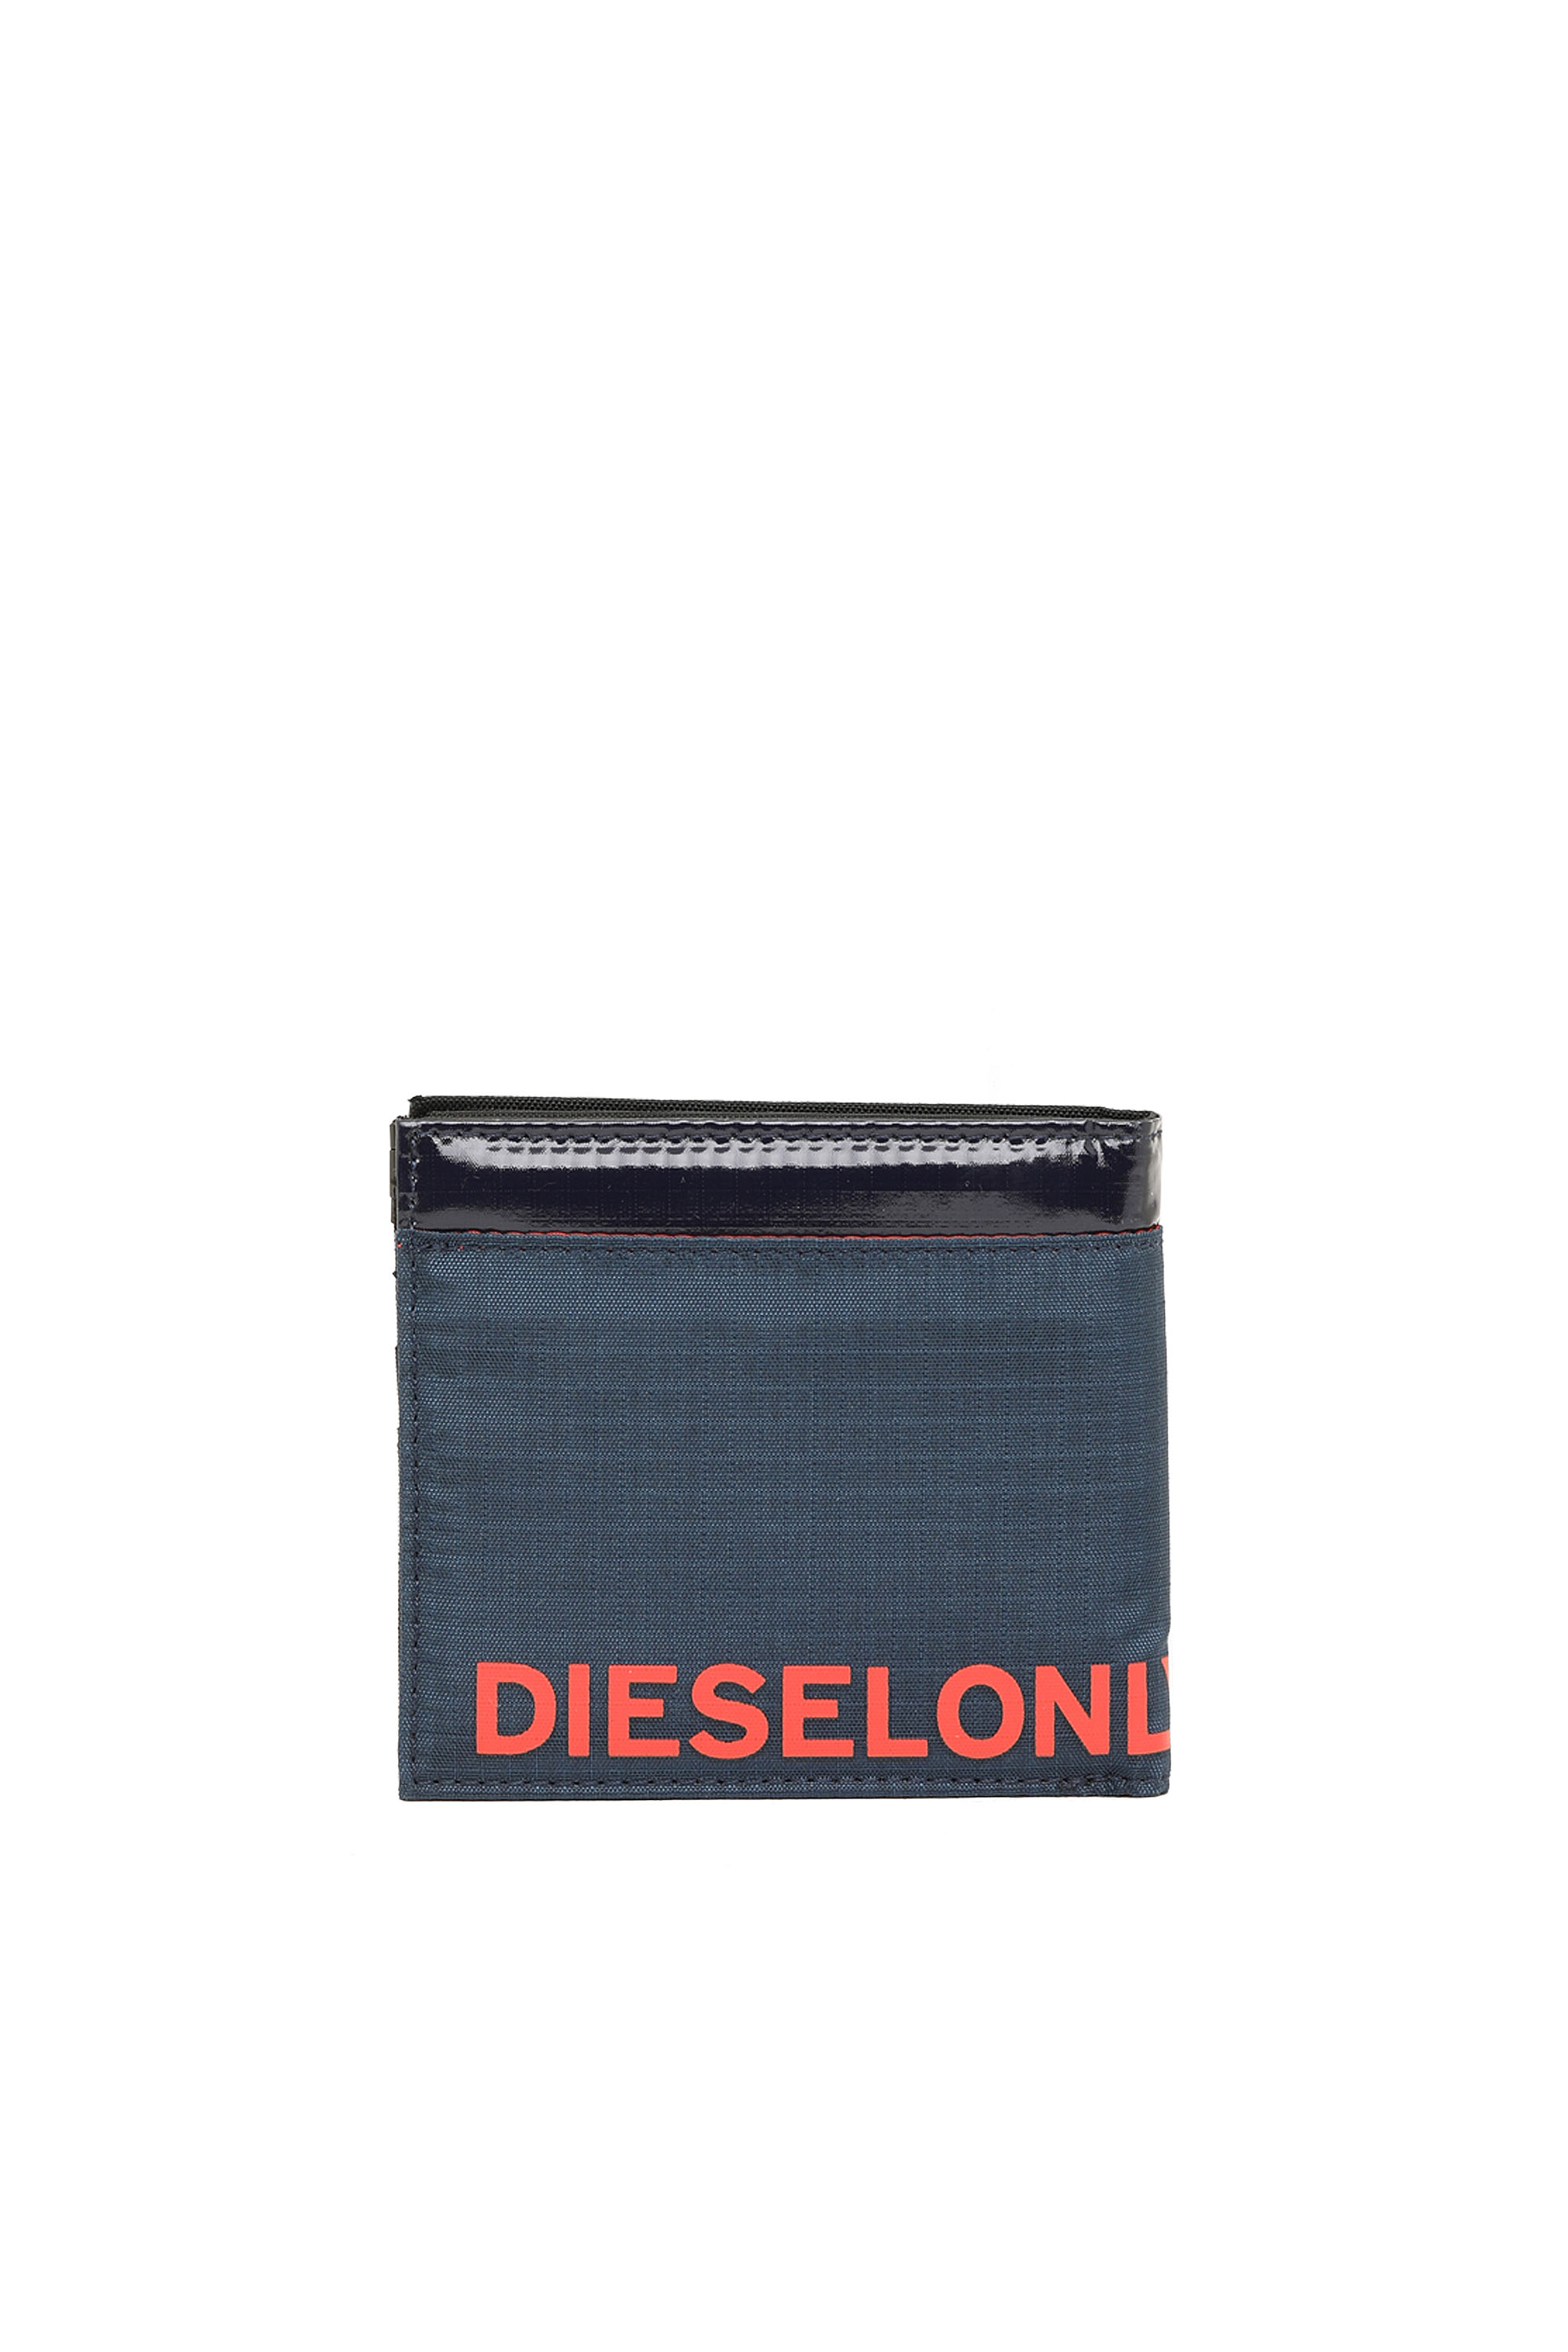 Diesel - HIRESH SP, Azul marino/Rojo - Image 2